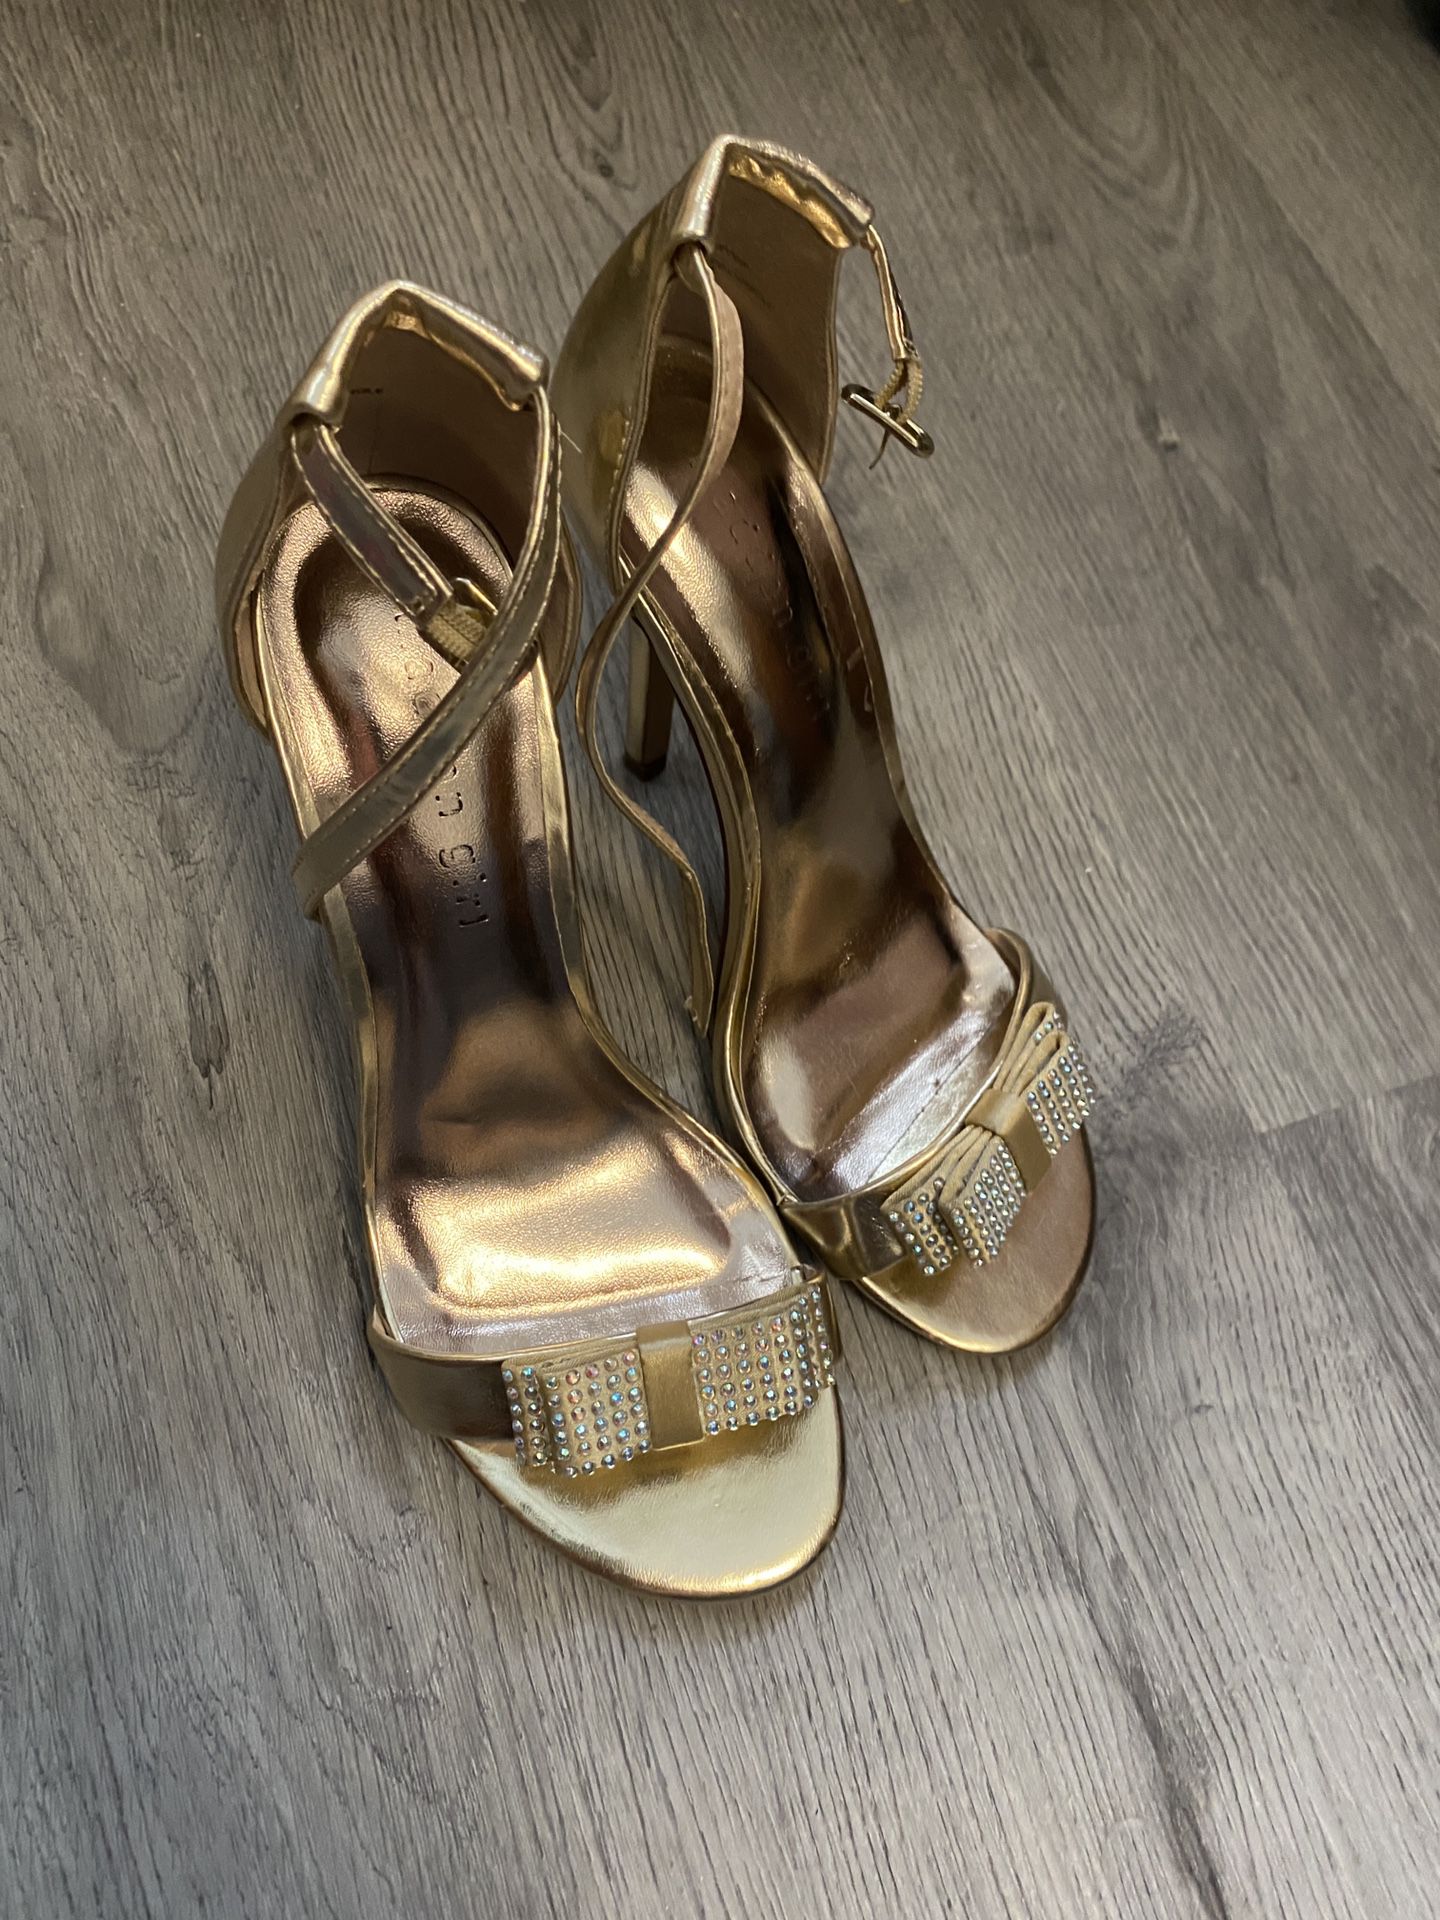 Stunning Gold Rainbow Rhinestone Studded Bow 6” Stiletto Heels - Women’s Size 7.5